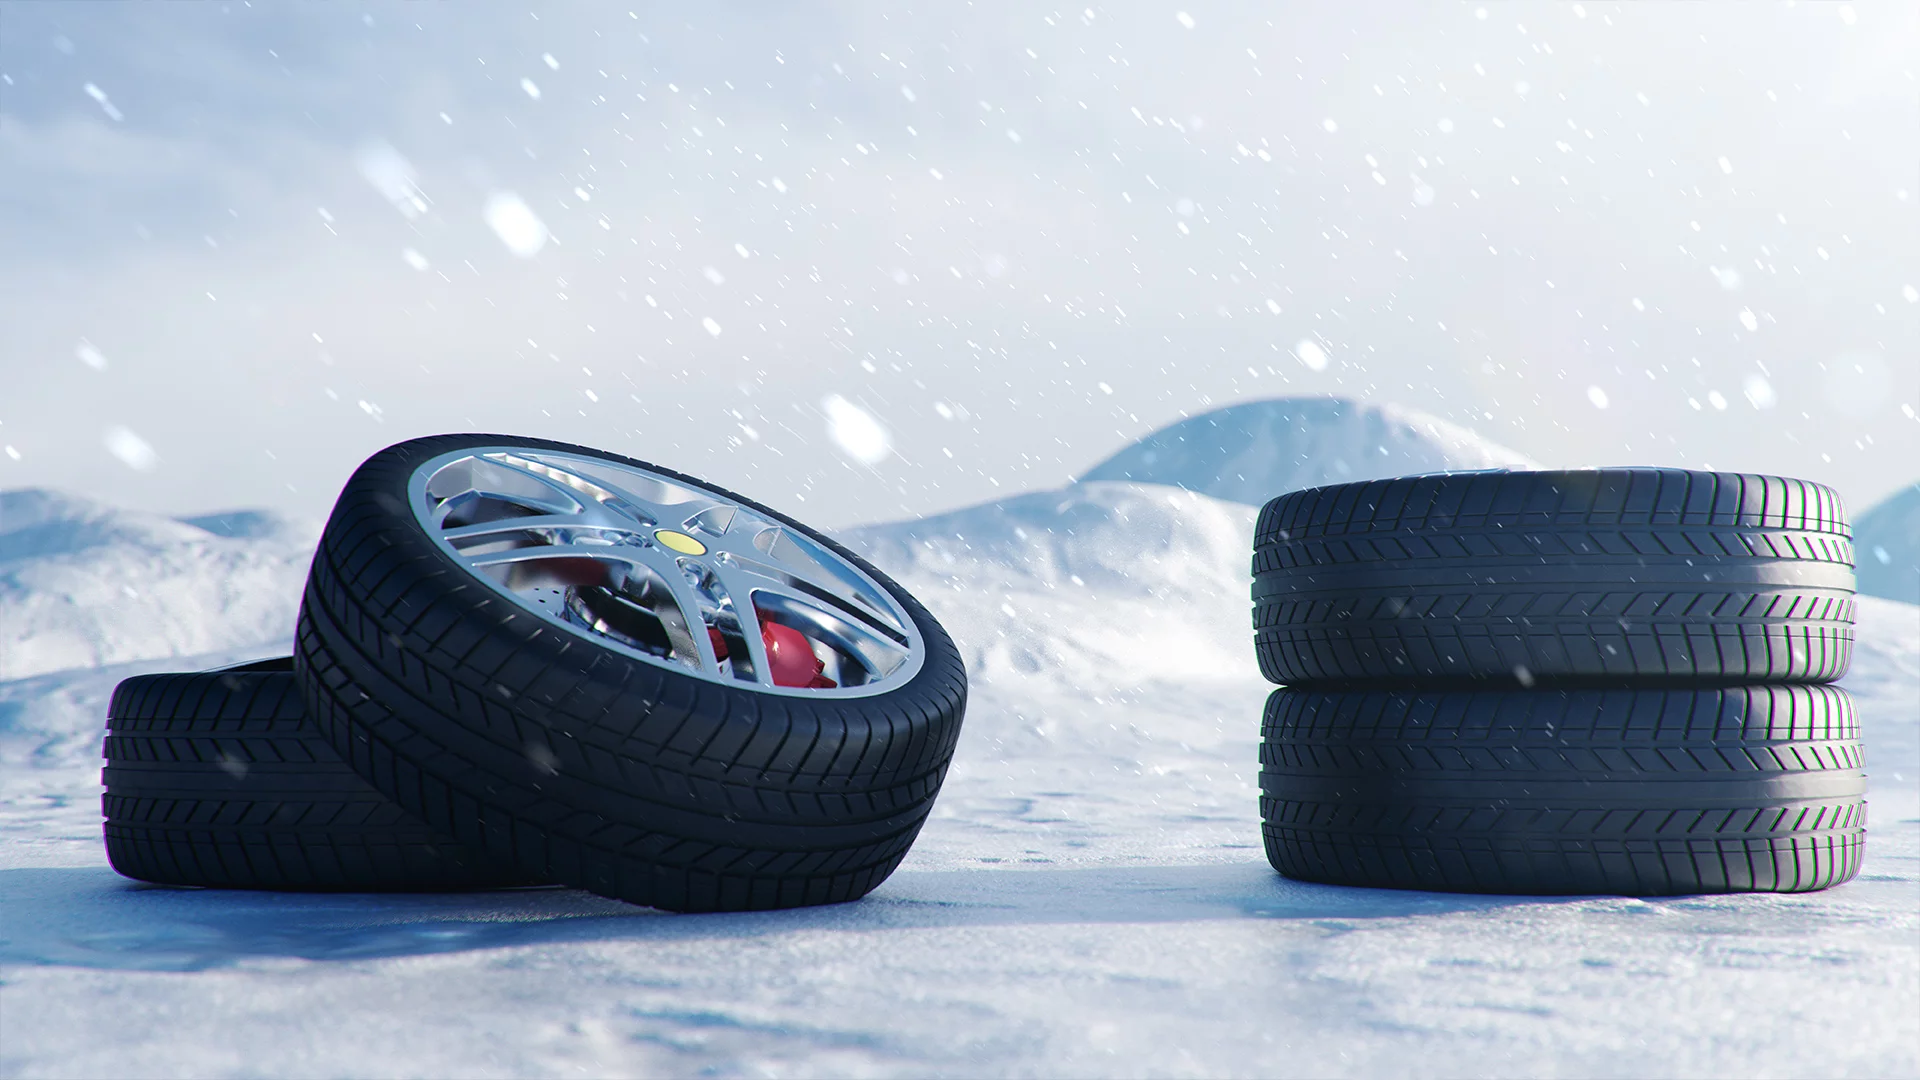 Quel pneu hiver choisir?